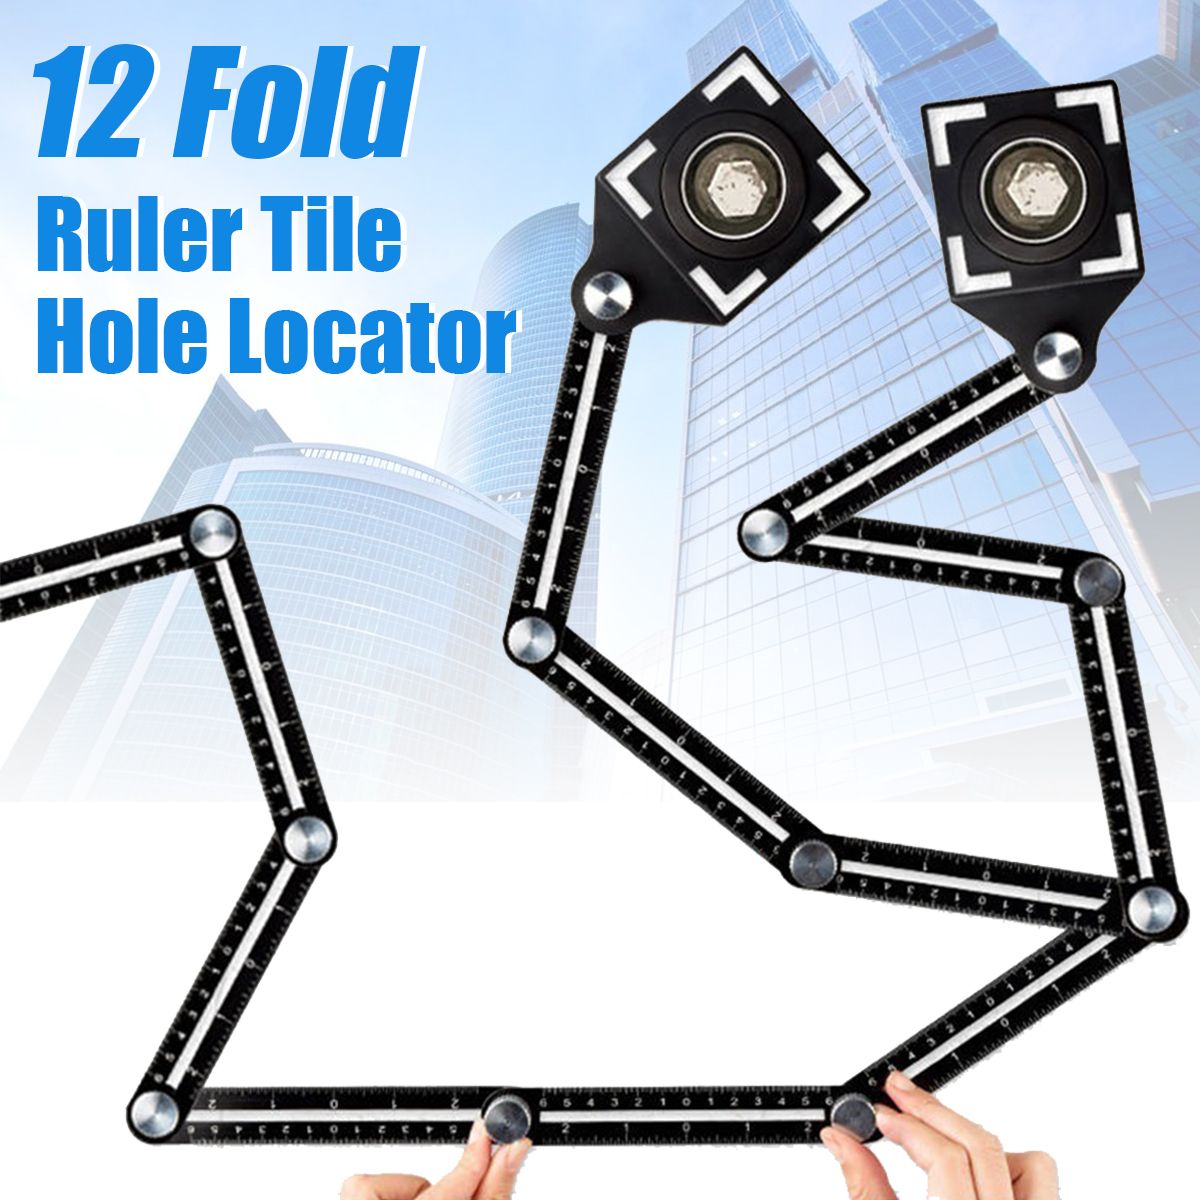 12-Fold-Adjustable-Multi-Angle-Ruler-Measure-Folding-Position-Tile-Hole-Locator-1644189